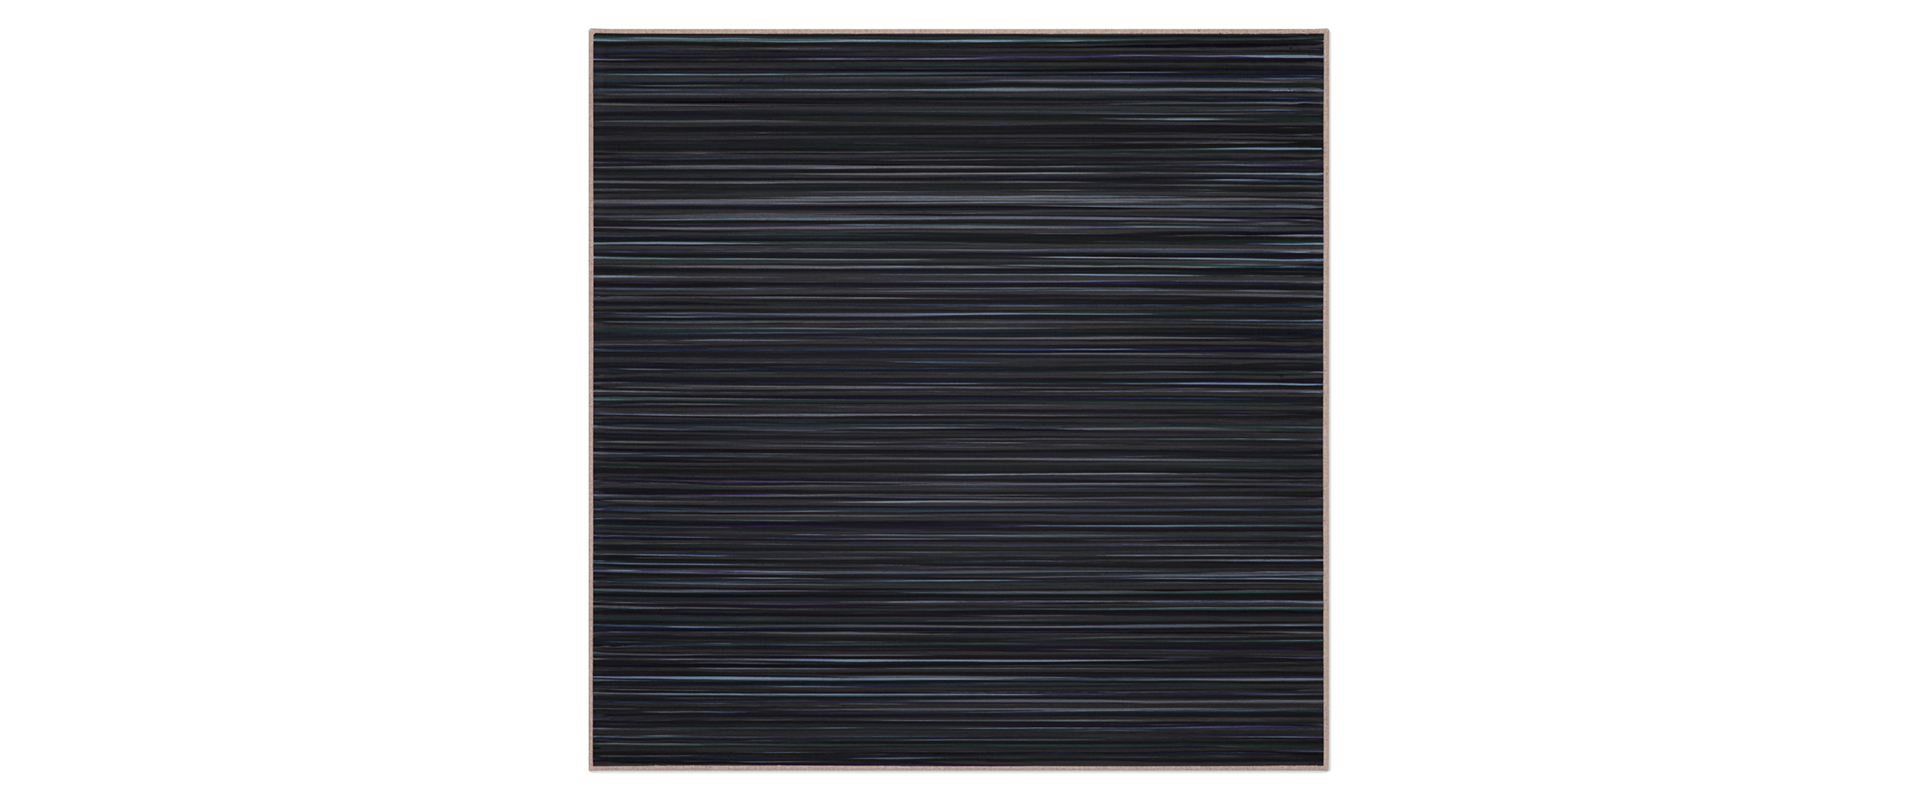 Untitled (2139) - 2021, Acryl auf Leinwand, 50 x 50 cm